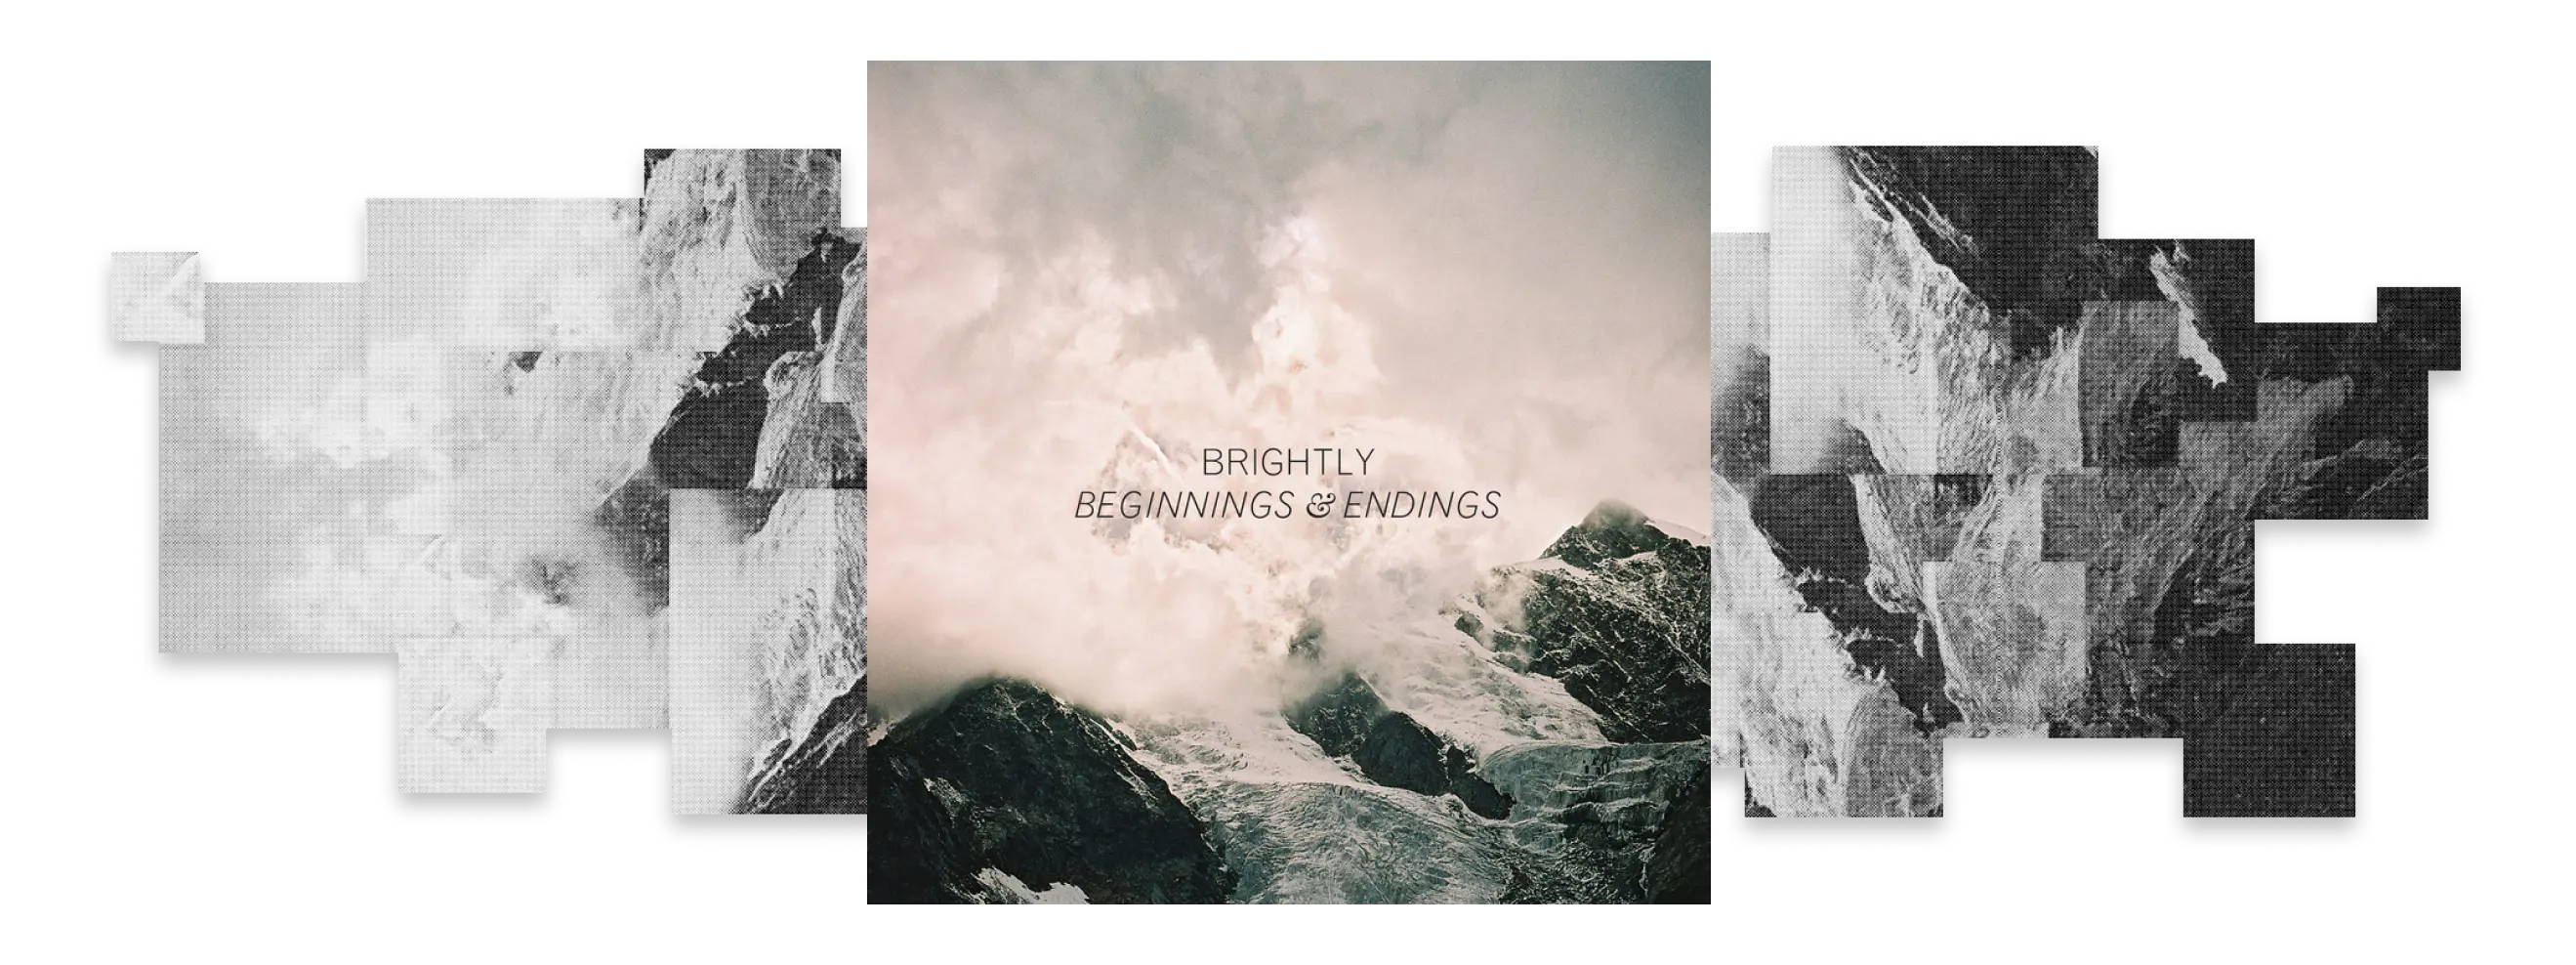 The Beginnings & Endings album cover